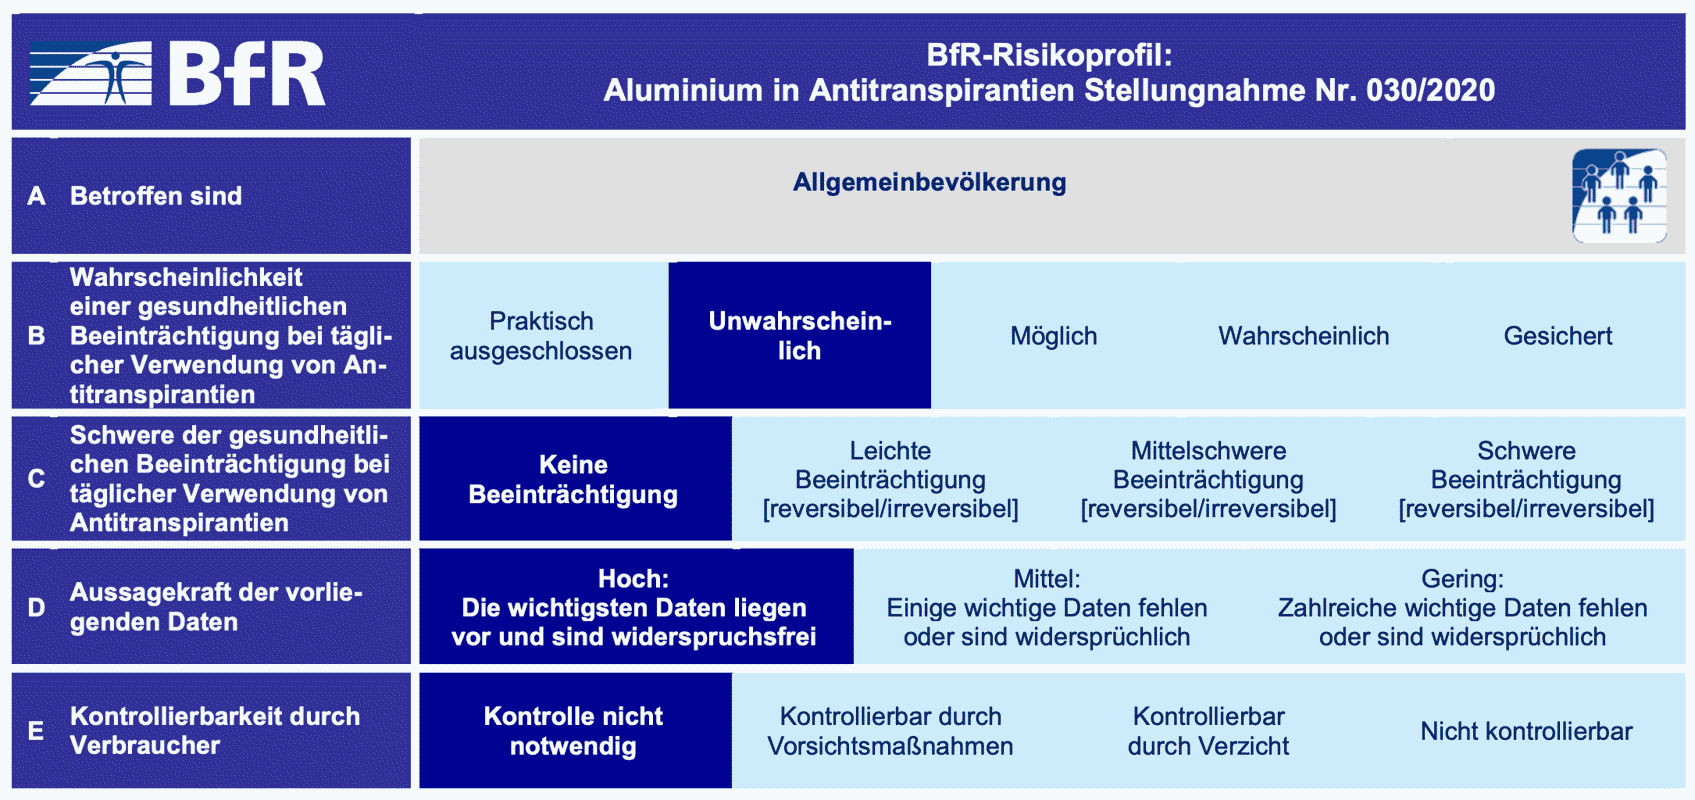 2020-07-20 BfR - Gesamtbewertung - Aluminiumhaltige Antitranspirantien.png